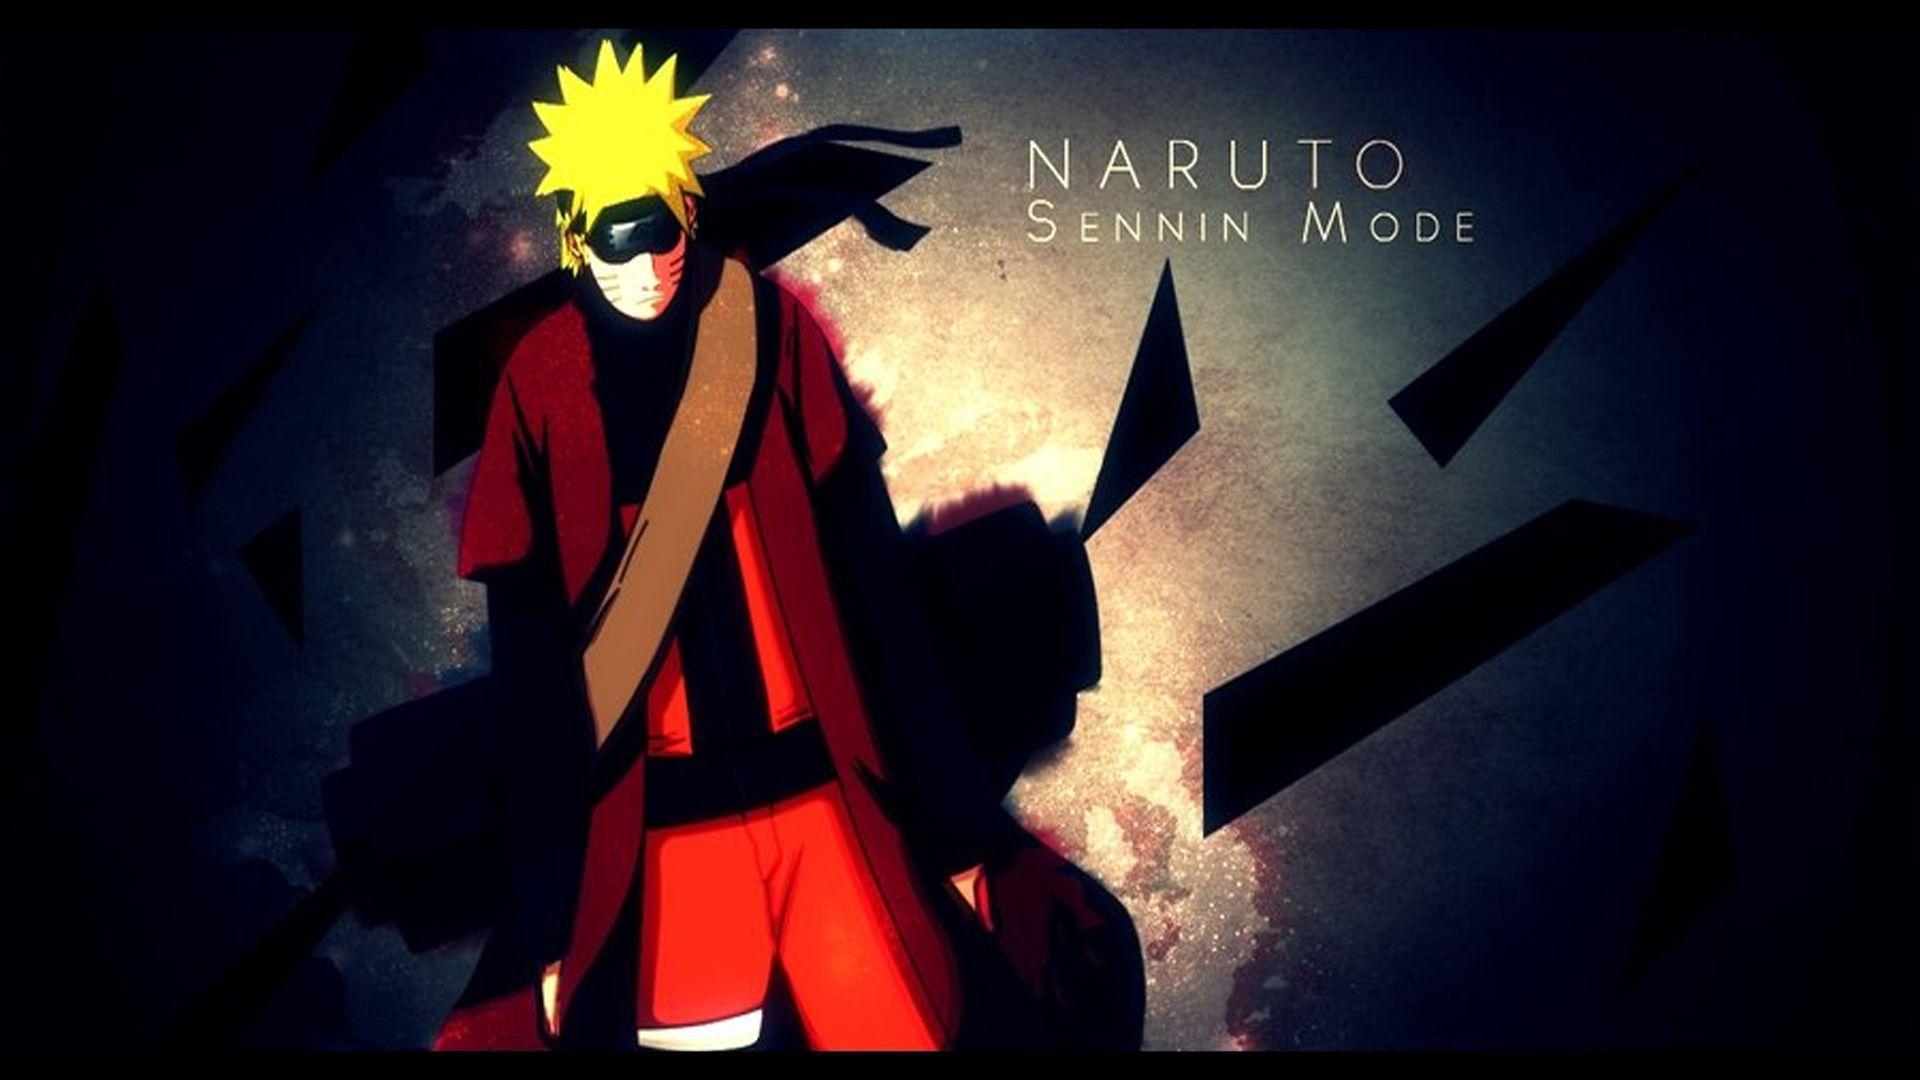 Naruto Sennin Mode Wallpapers by eaZyHD.